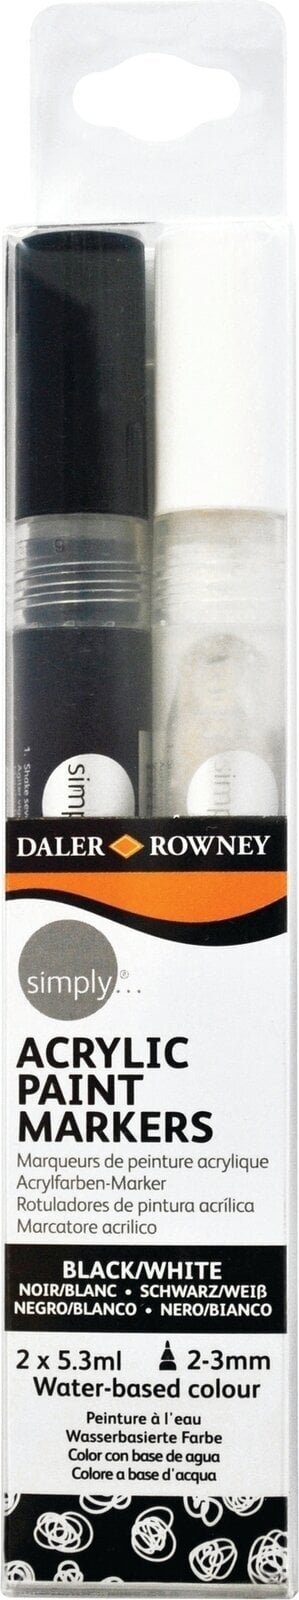 Filzstift Daler Rowney Simply Acrylic Marker Satz Acrylmarker Schwarz/Weiß 2 x 5,3 ml